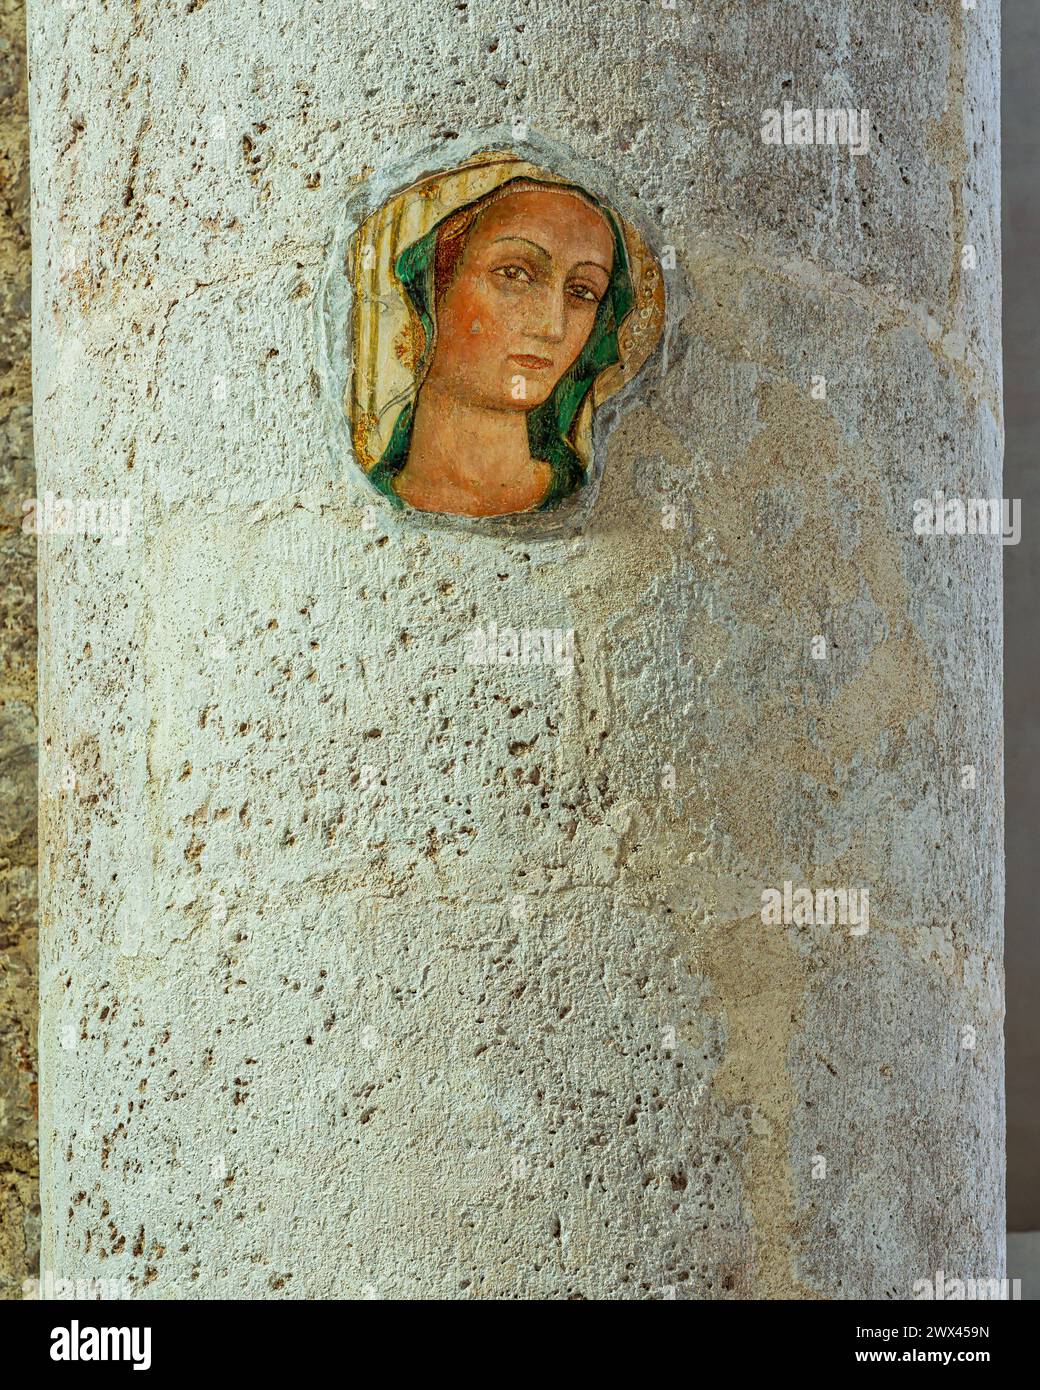 Restos de un fresco que representa una cara velada en una columna en la iglesia de San Silvestro. L'Aquila, Abruzzo, Italia, Europa Foto de stock